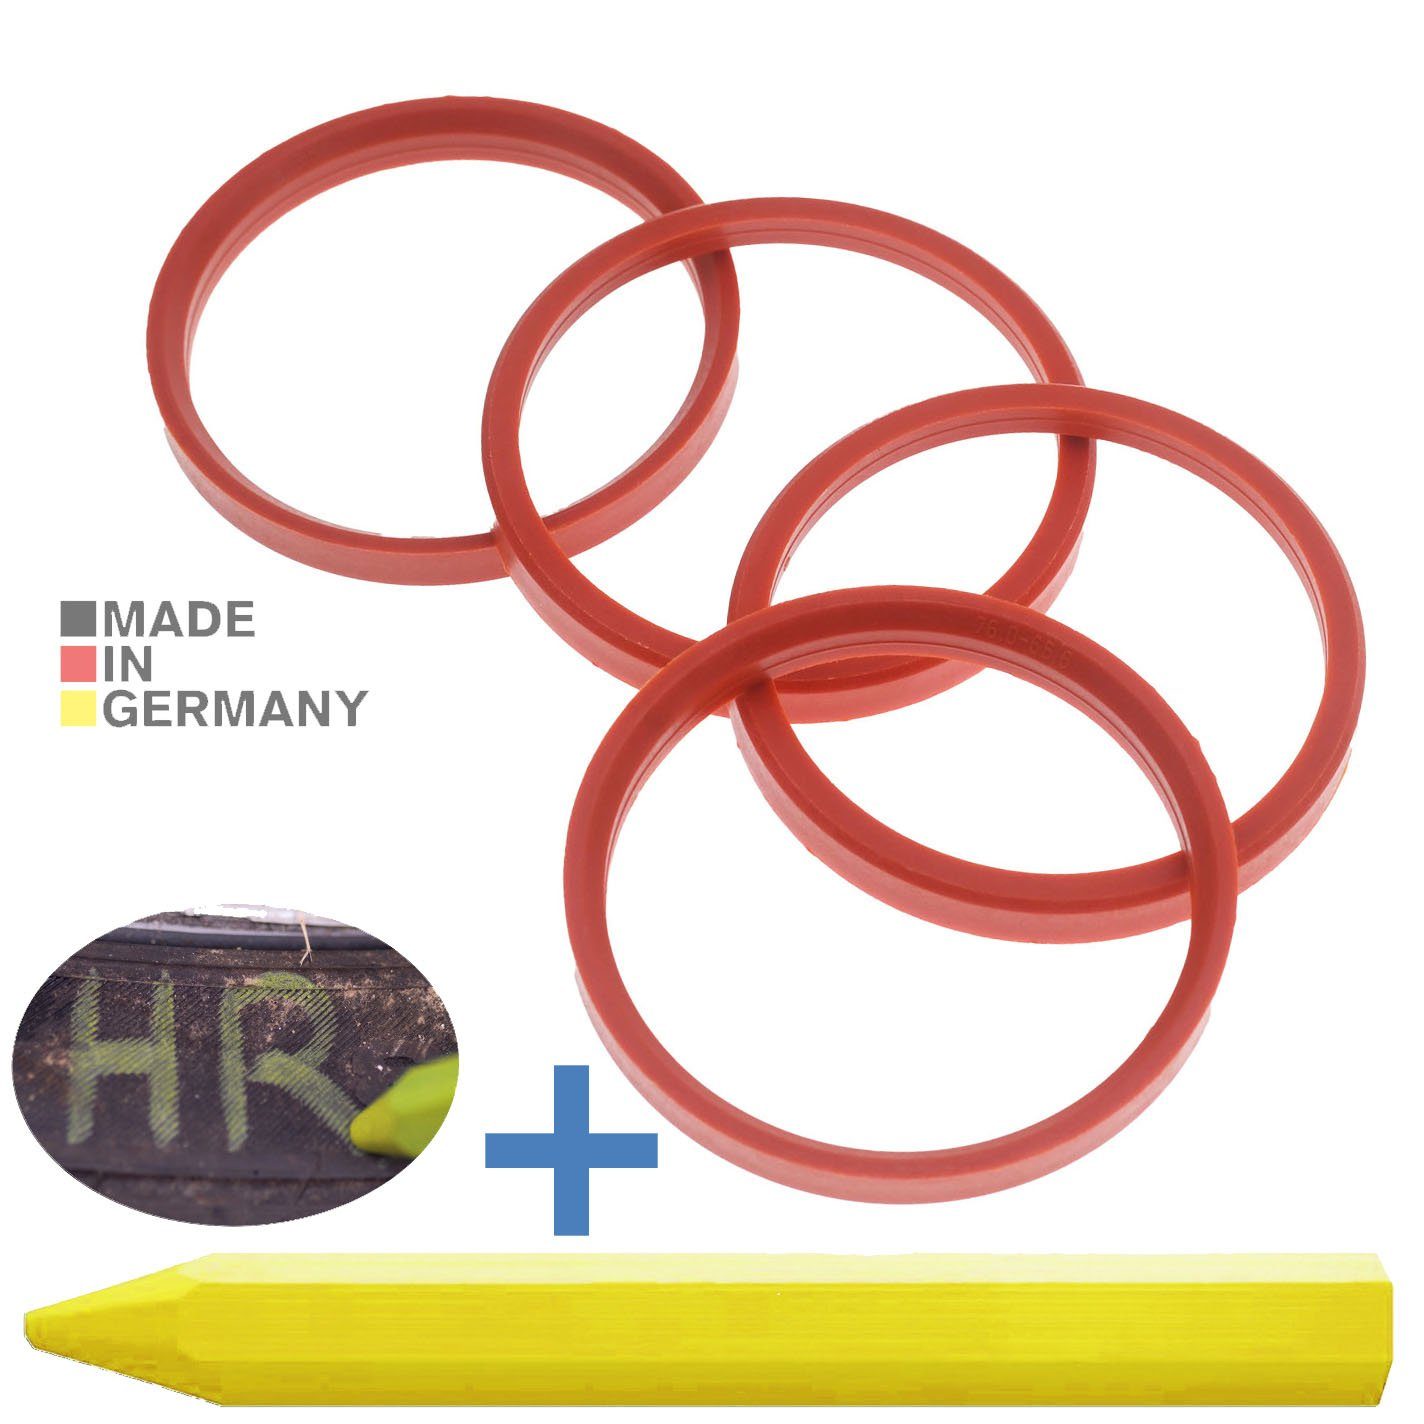 RKC Reifenstift 4X Zentrierringe Orange Felgen Ringe + 1x Reifen Kreide Fett Stift, Maße: 76,0 x 66,6 mm | Reifenstifte